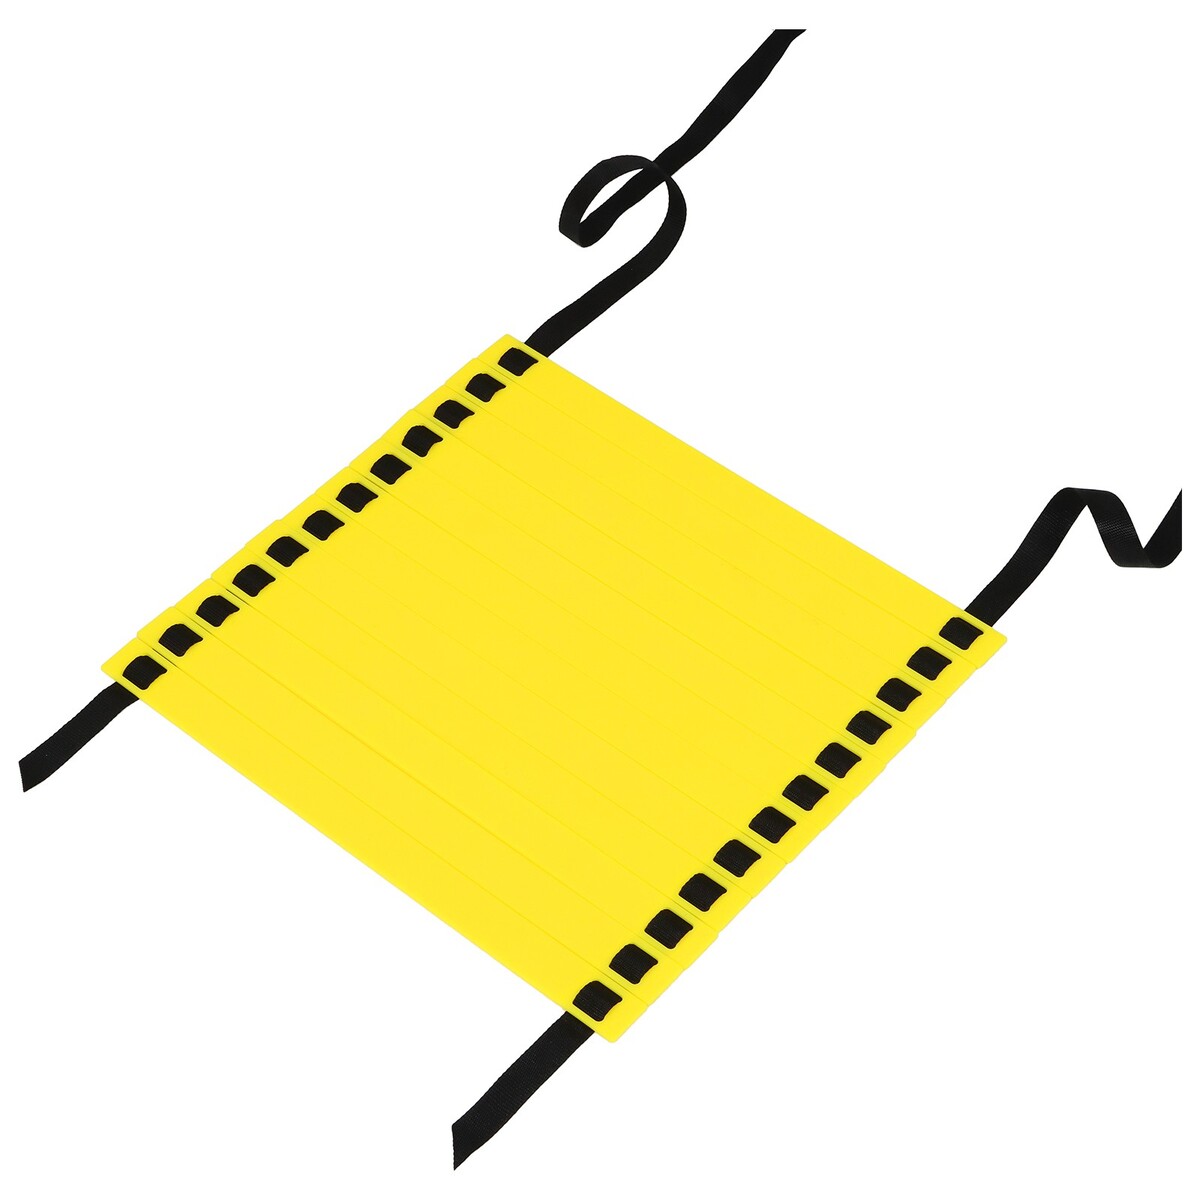 Координационная лестница onlytop, 6 м, толщина 4 мм, цвет желтый лестница координационная atemi длина 6м aal 619 1